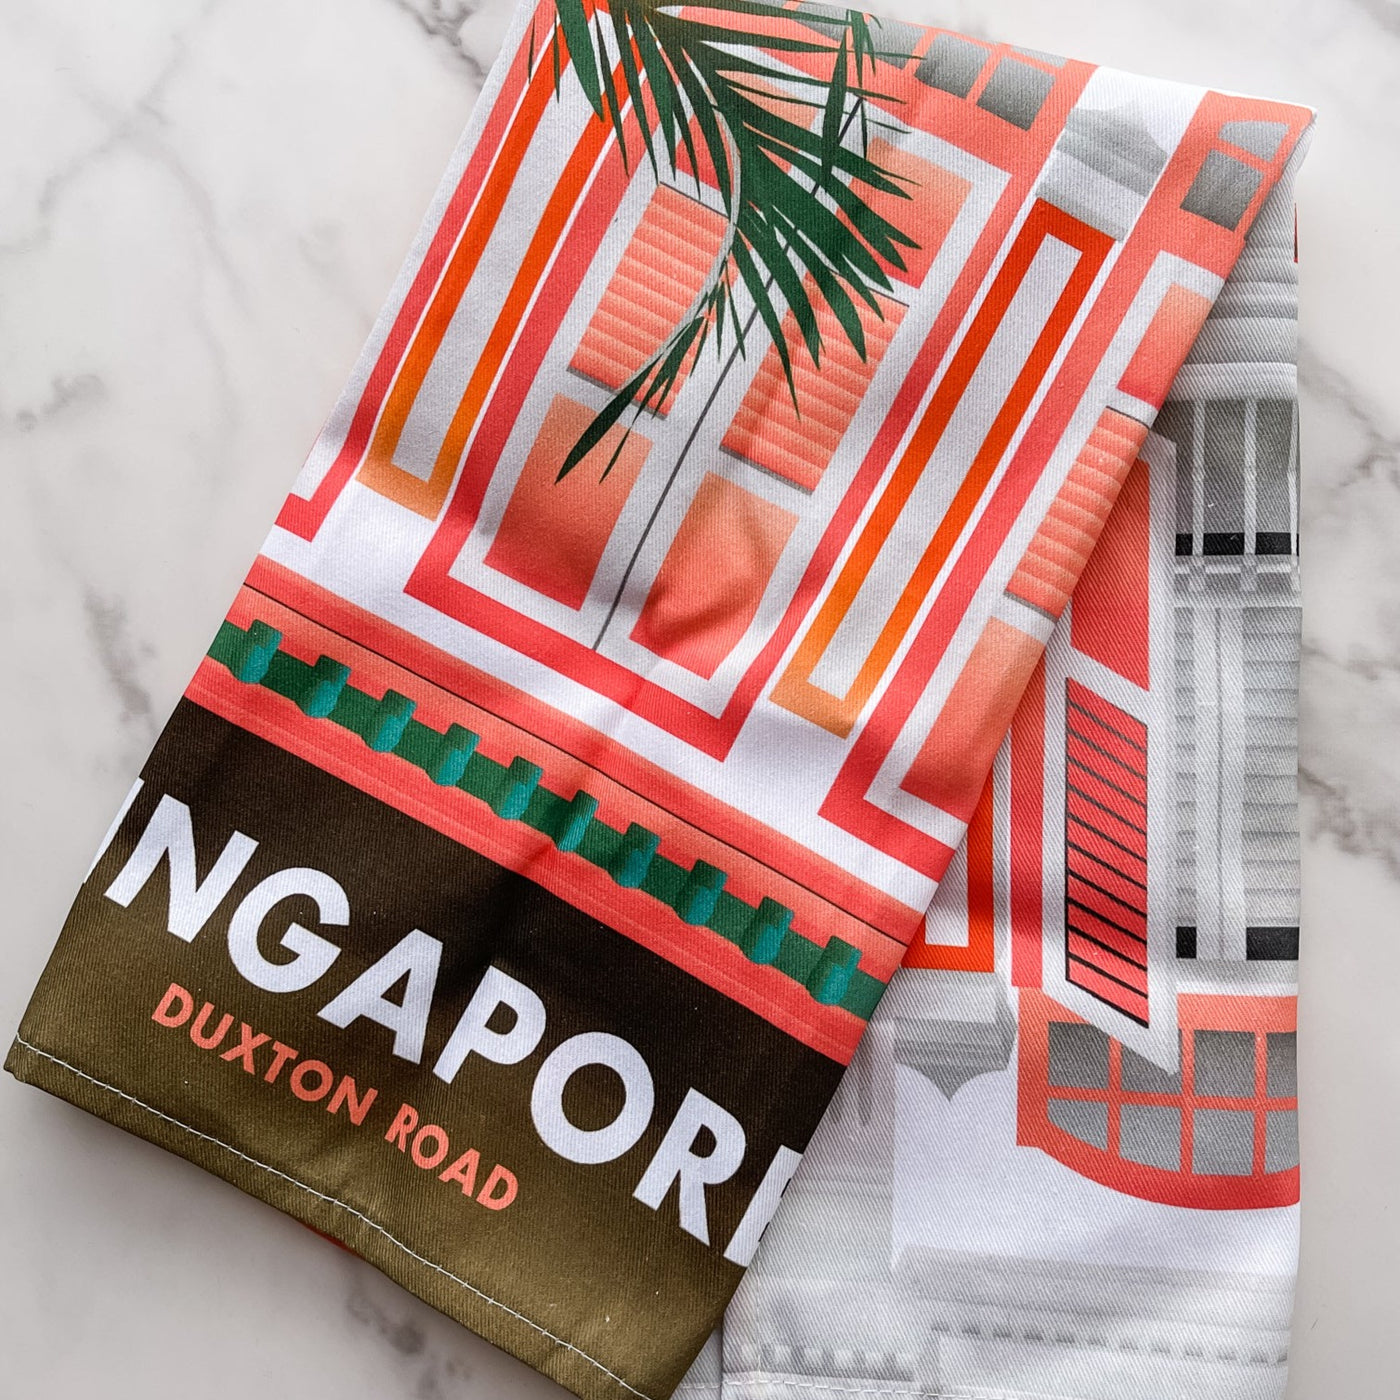 Singapore - Duxton Road Tea Towel